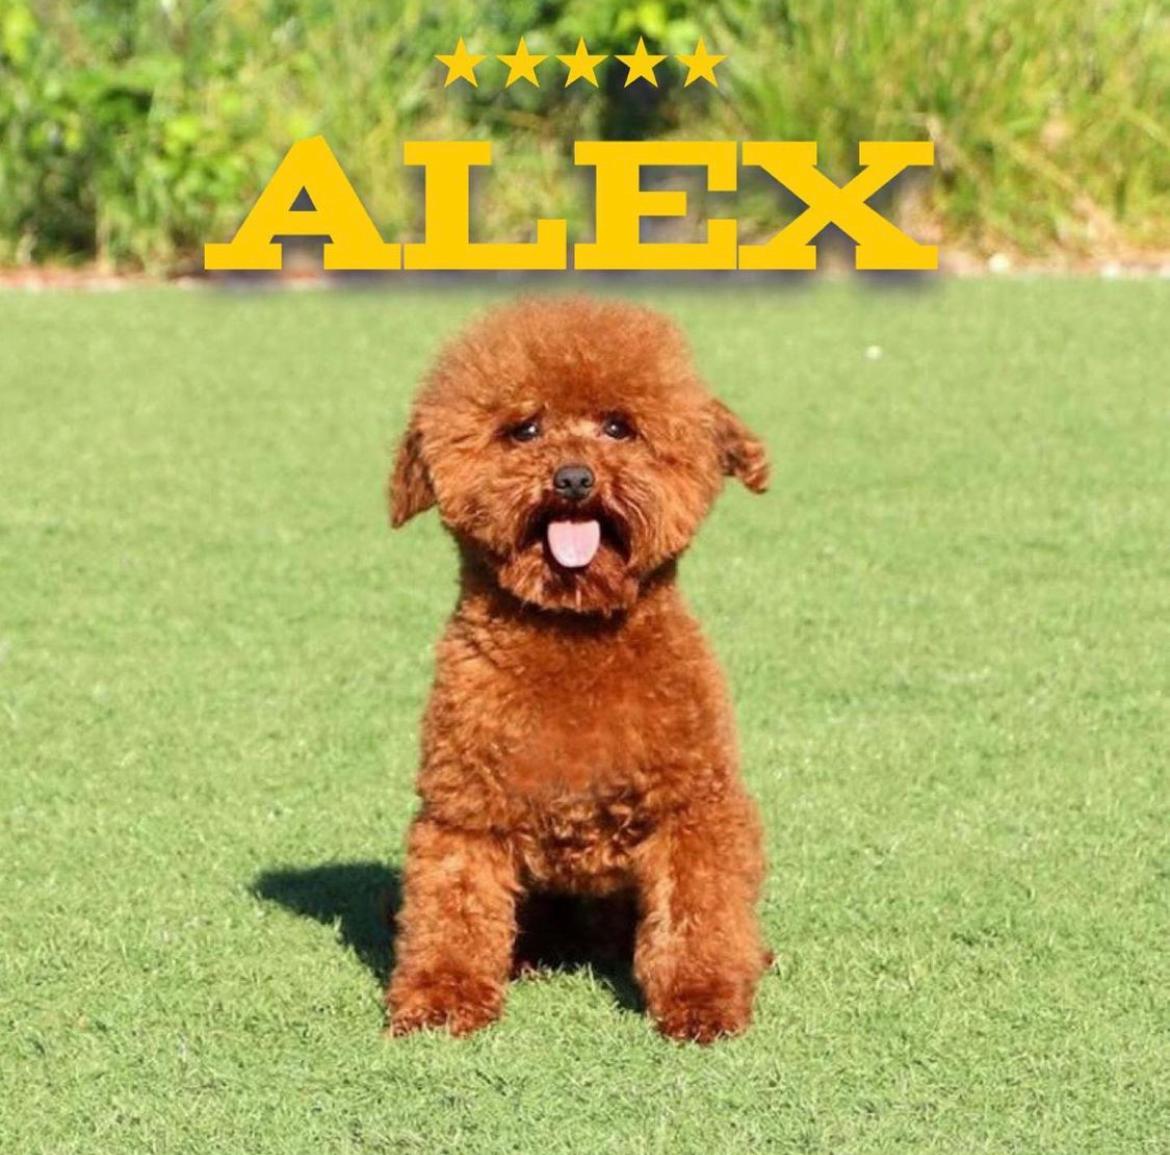 Fenomen Redbrown Poodle dostumuz Alex